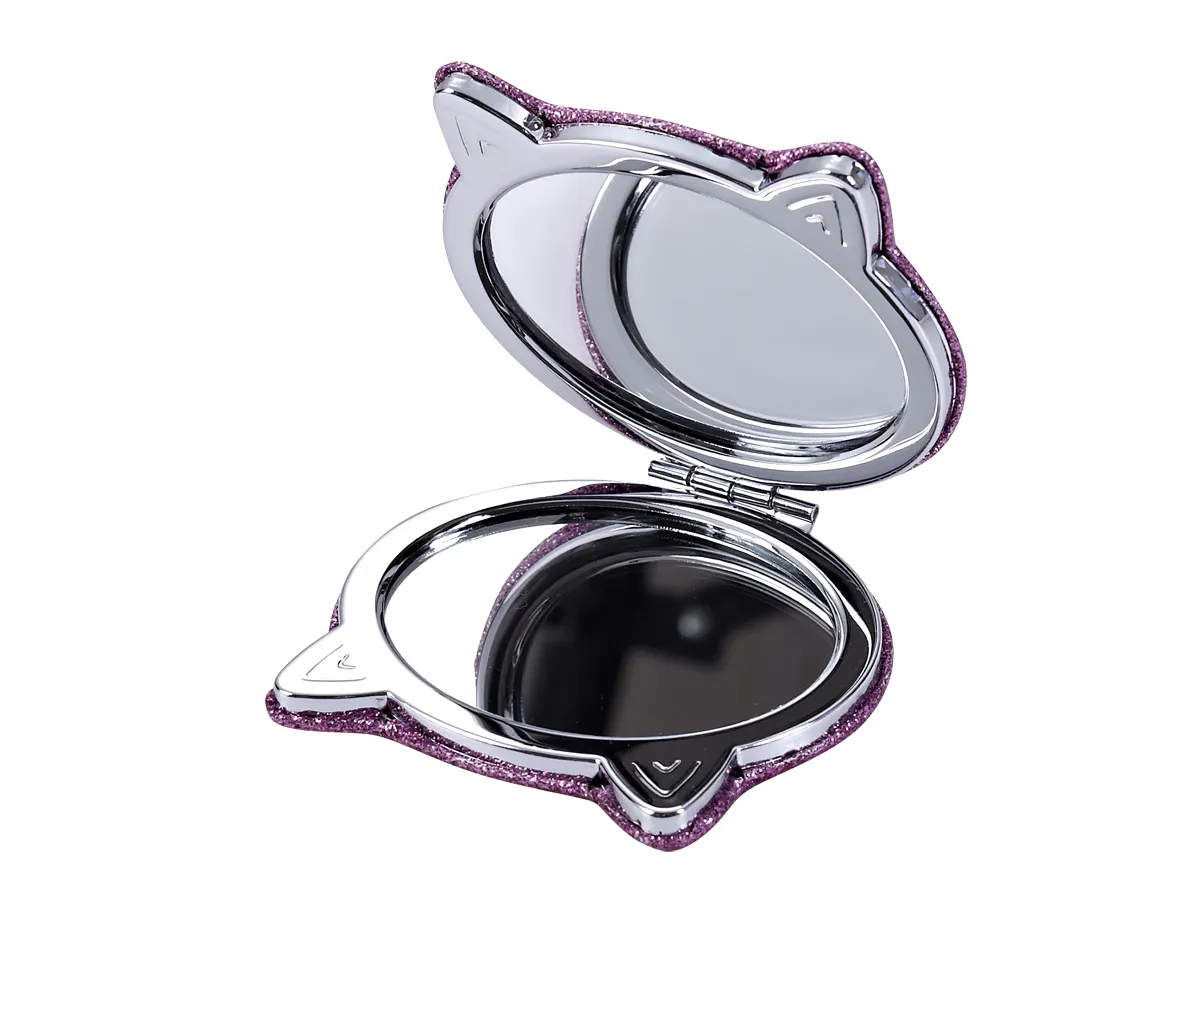 Anime cat beauty mirrors plastic mini handheld cosmetic travel pocket mirror